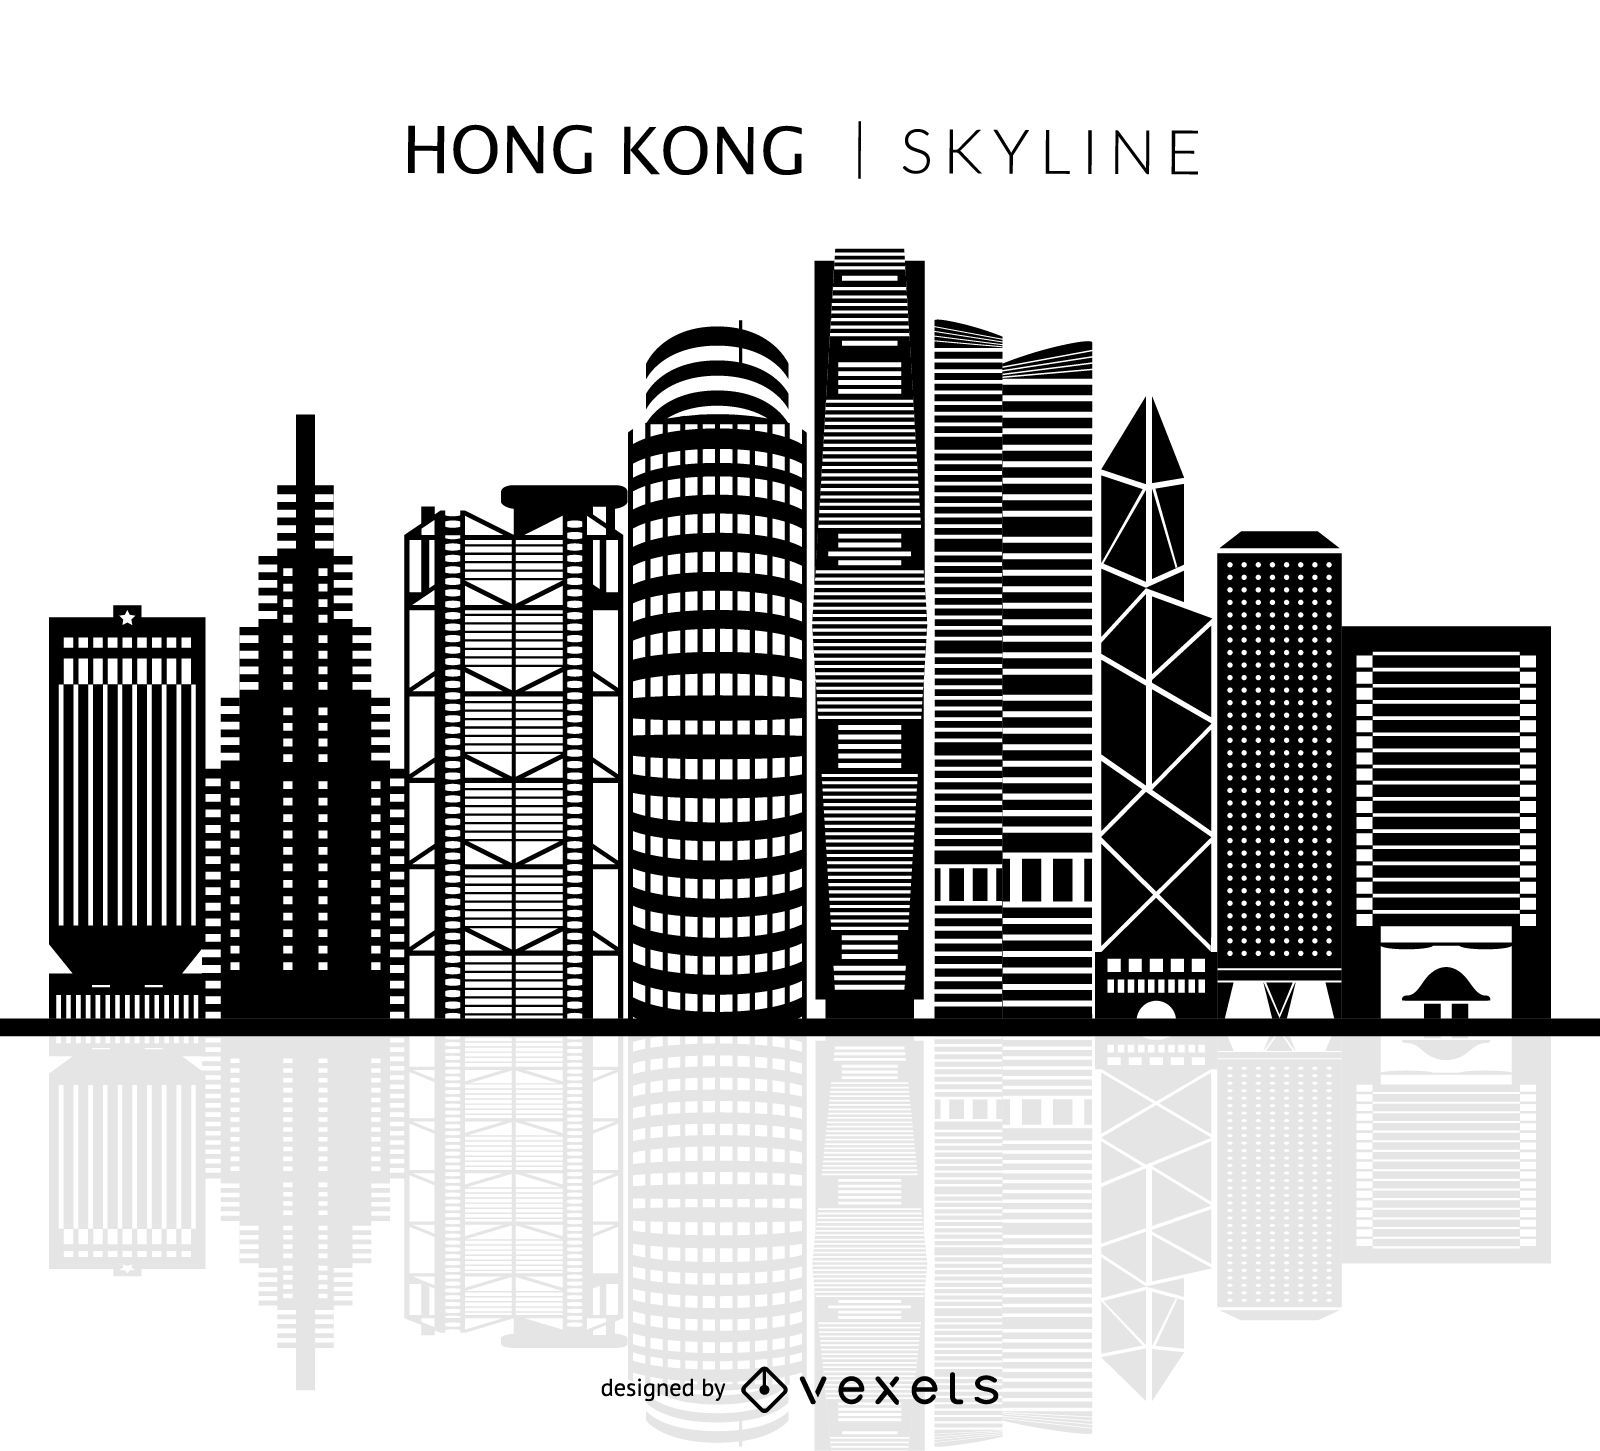 Hong Kong isolated skyline